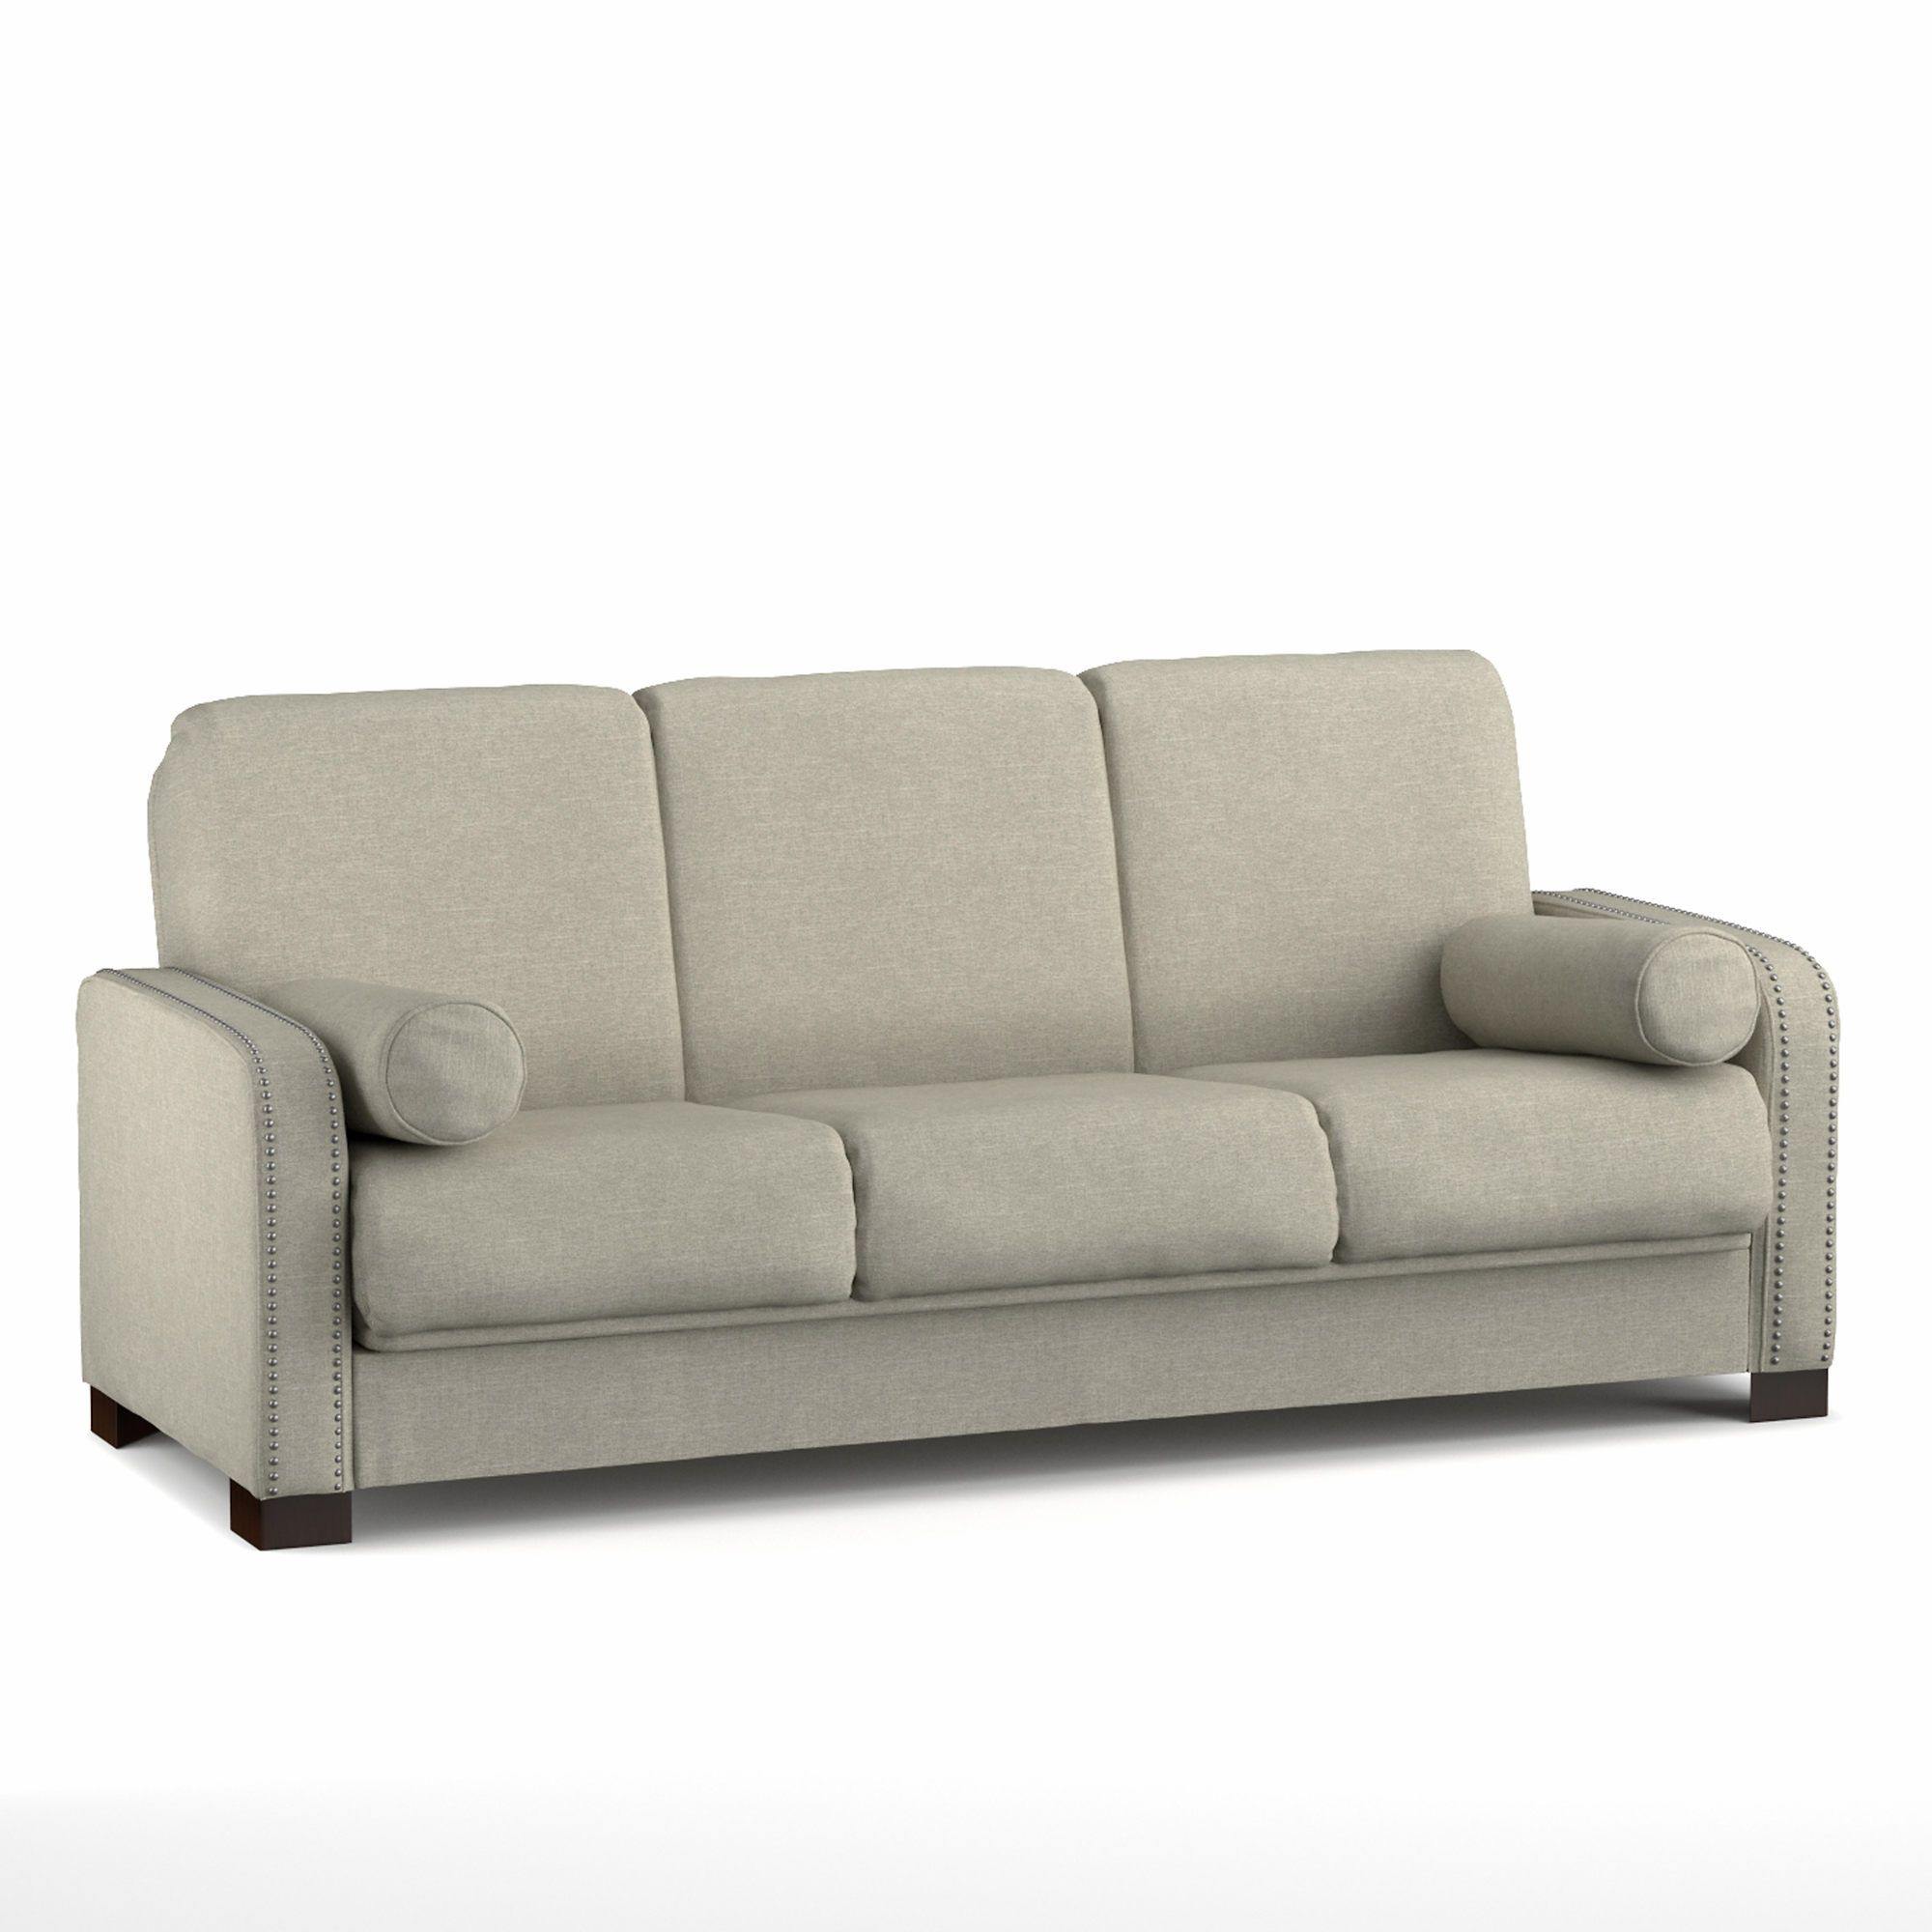 Bjs Leather Sleeper Sofa • Patio Ideas